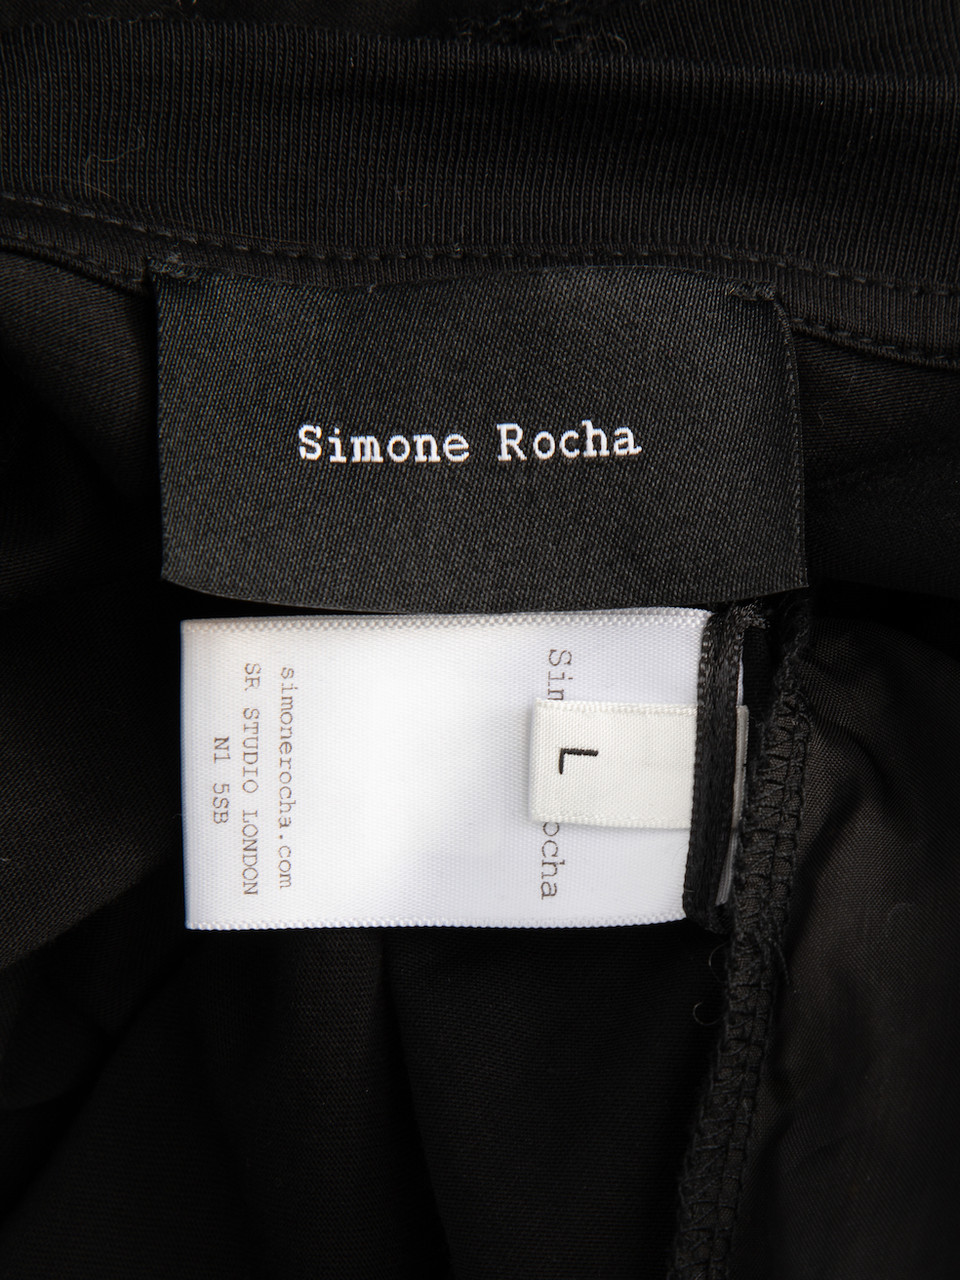 Simone Rocha Black Lace & Embellished Detail Top